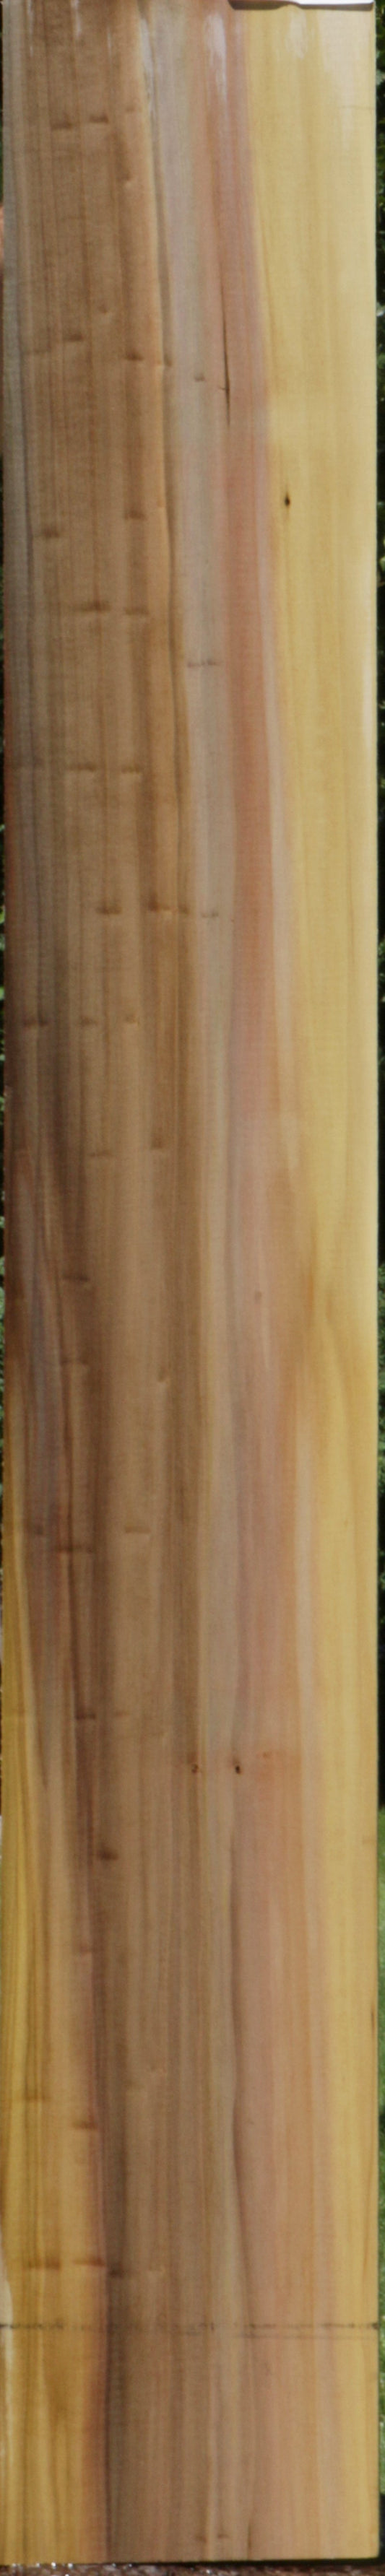 Purple Poplar Lumber